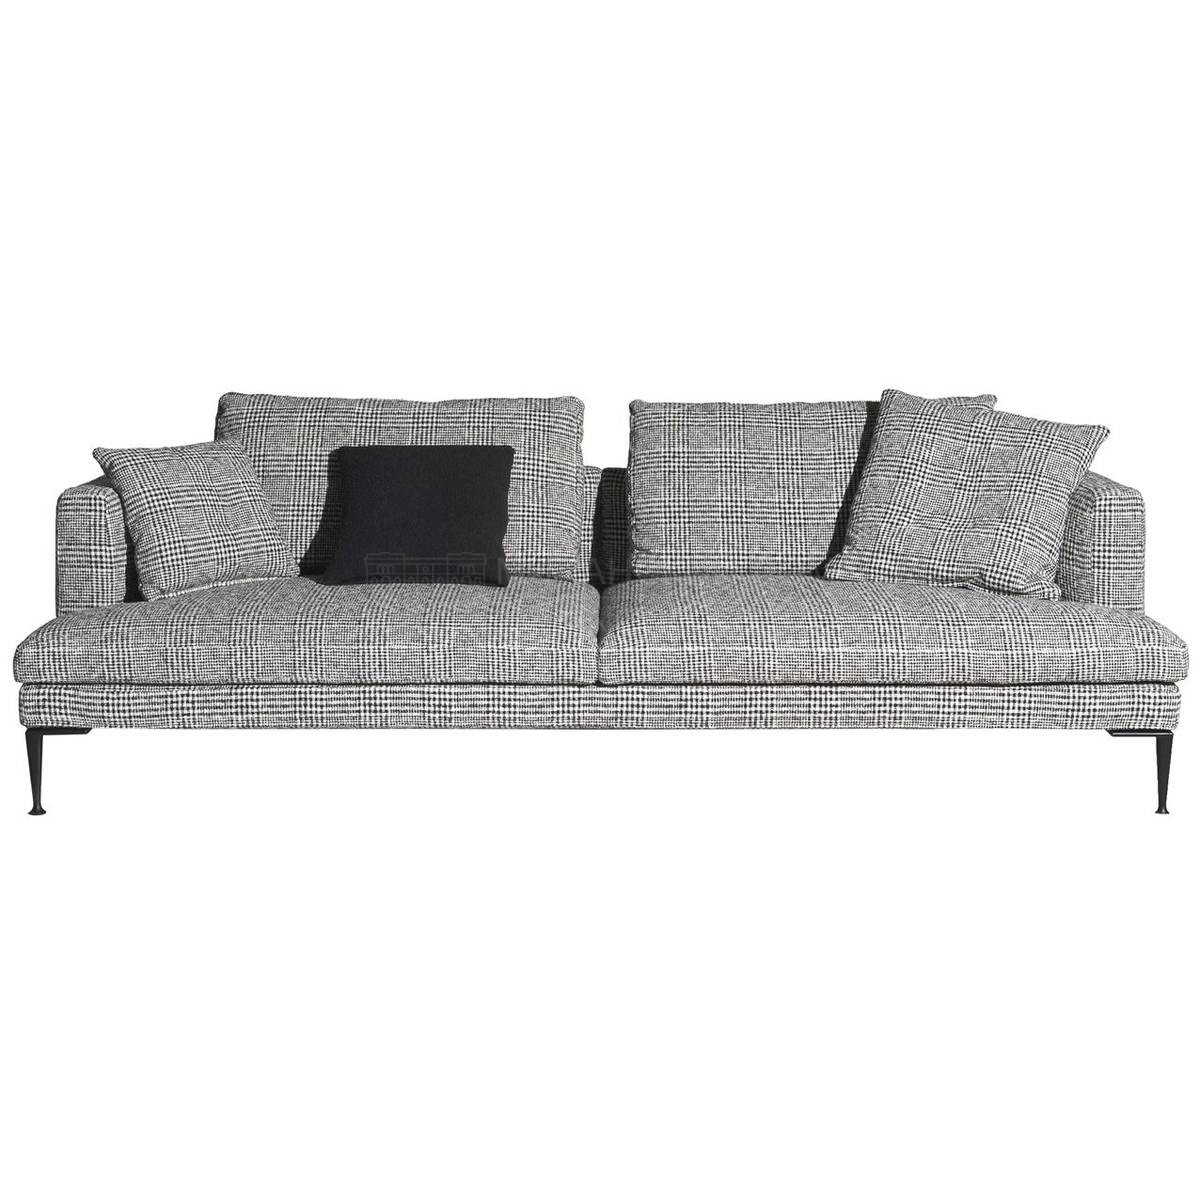 Прямой диван Lirico sofa из Италии фабрики DRIADE